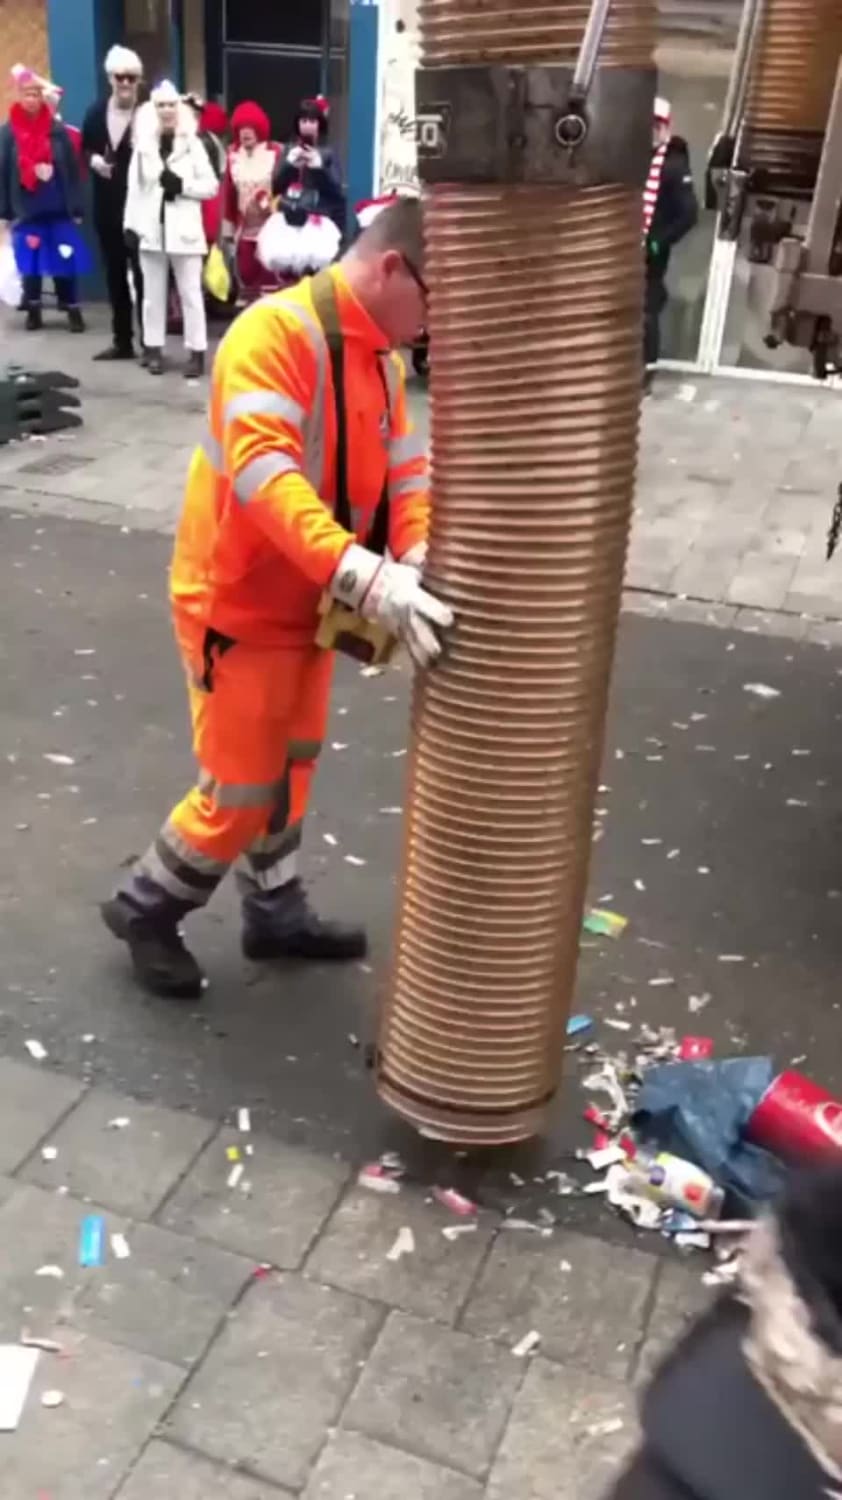 Huge street cleaning vacuum in action